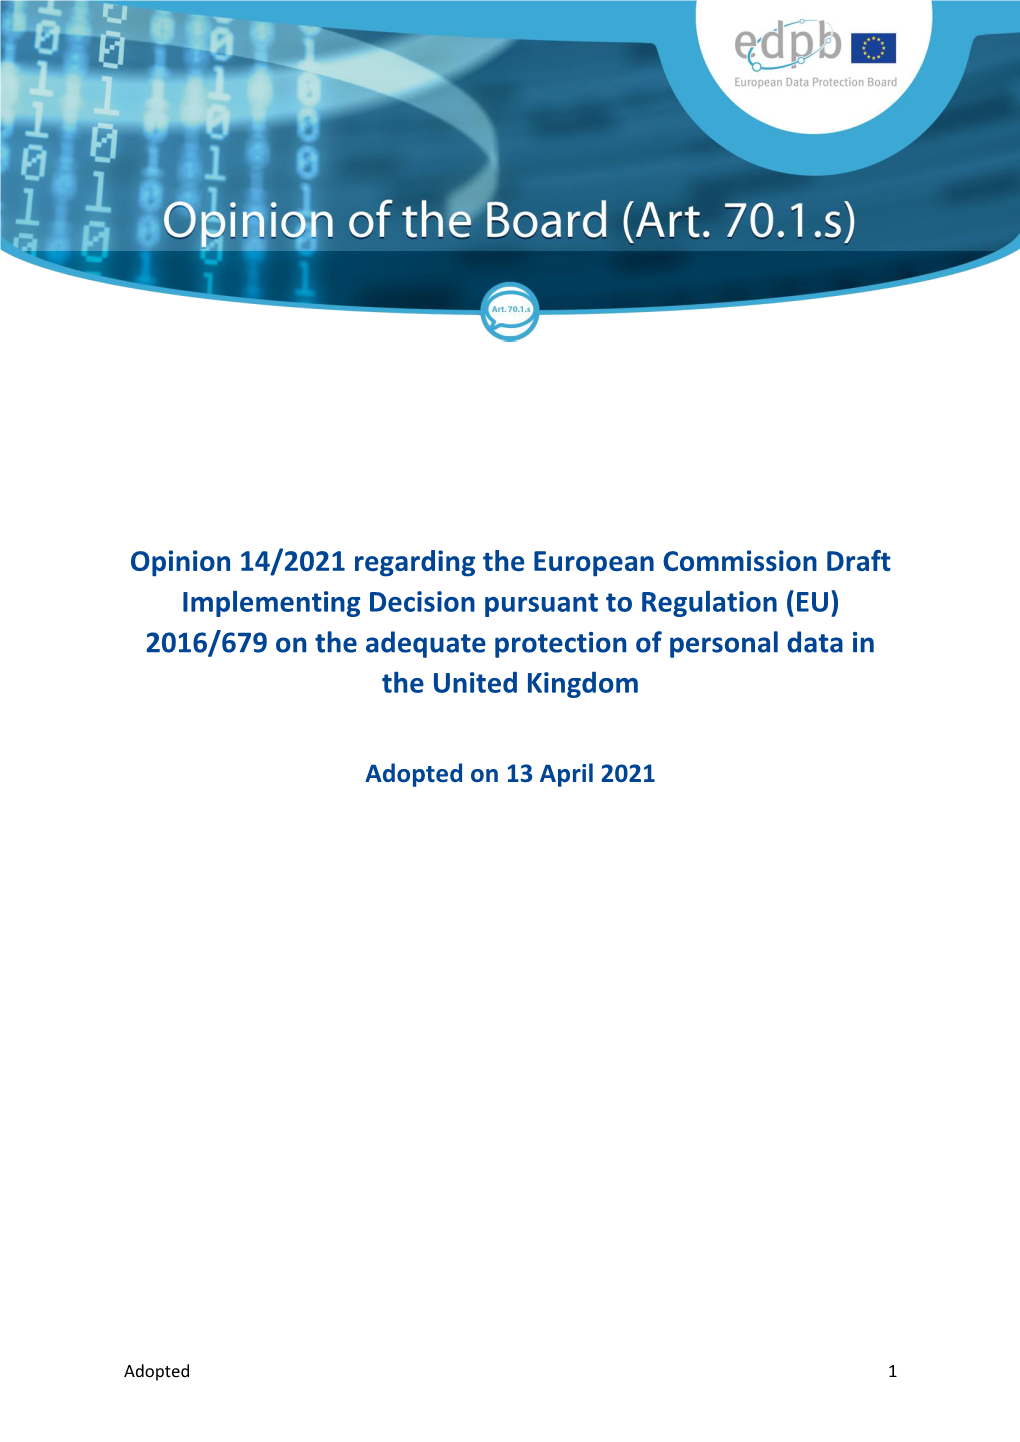 Opinion 14/2021 Regarding the European Commission Draft